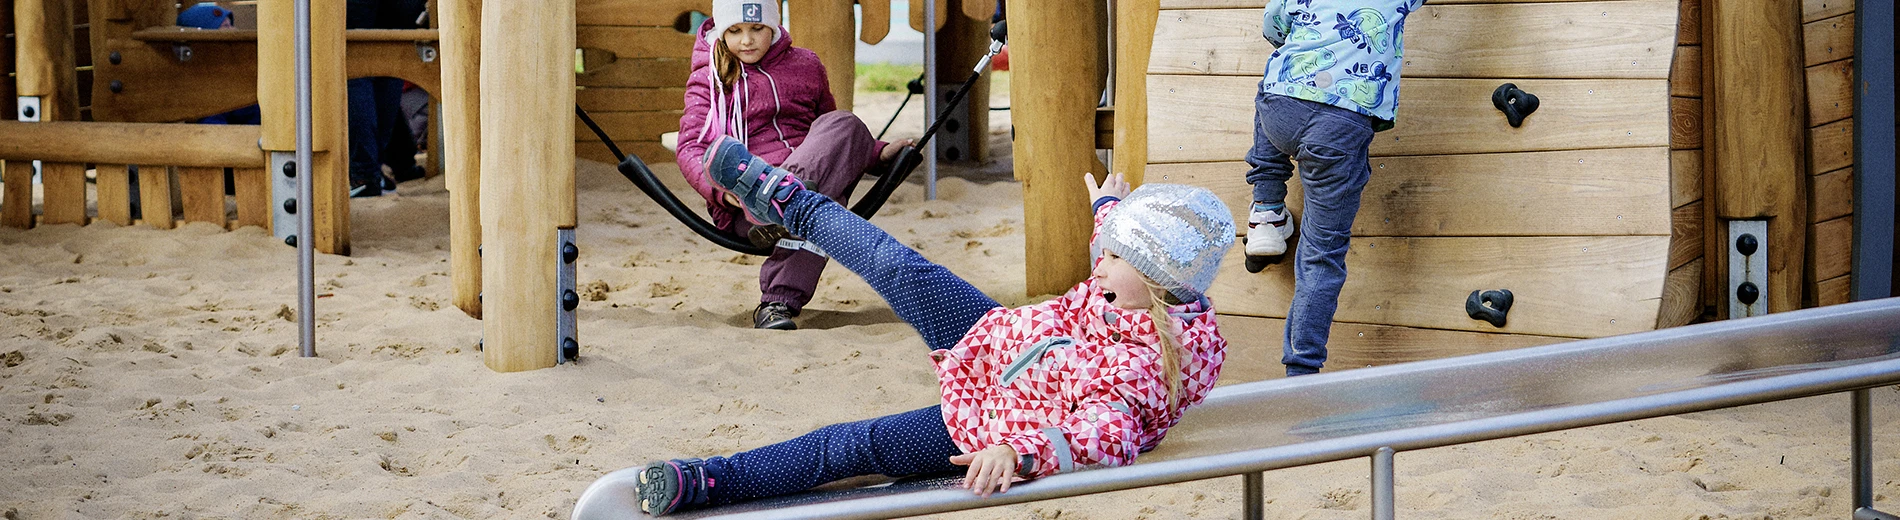 contact KOMPAN Australia top slider image of girl sliding down a playground slide